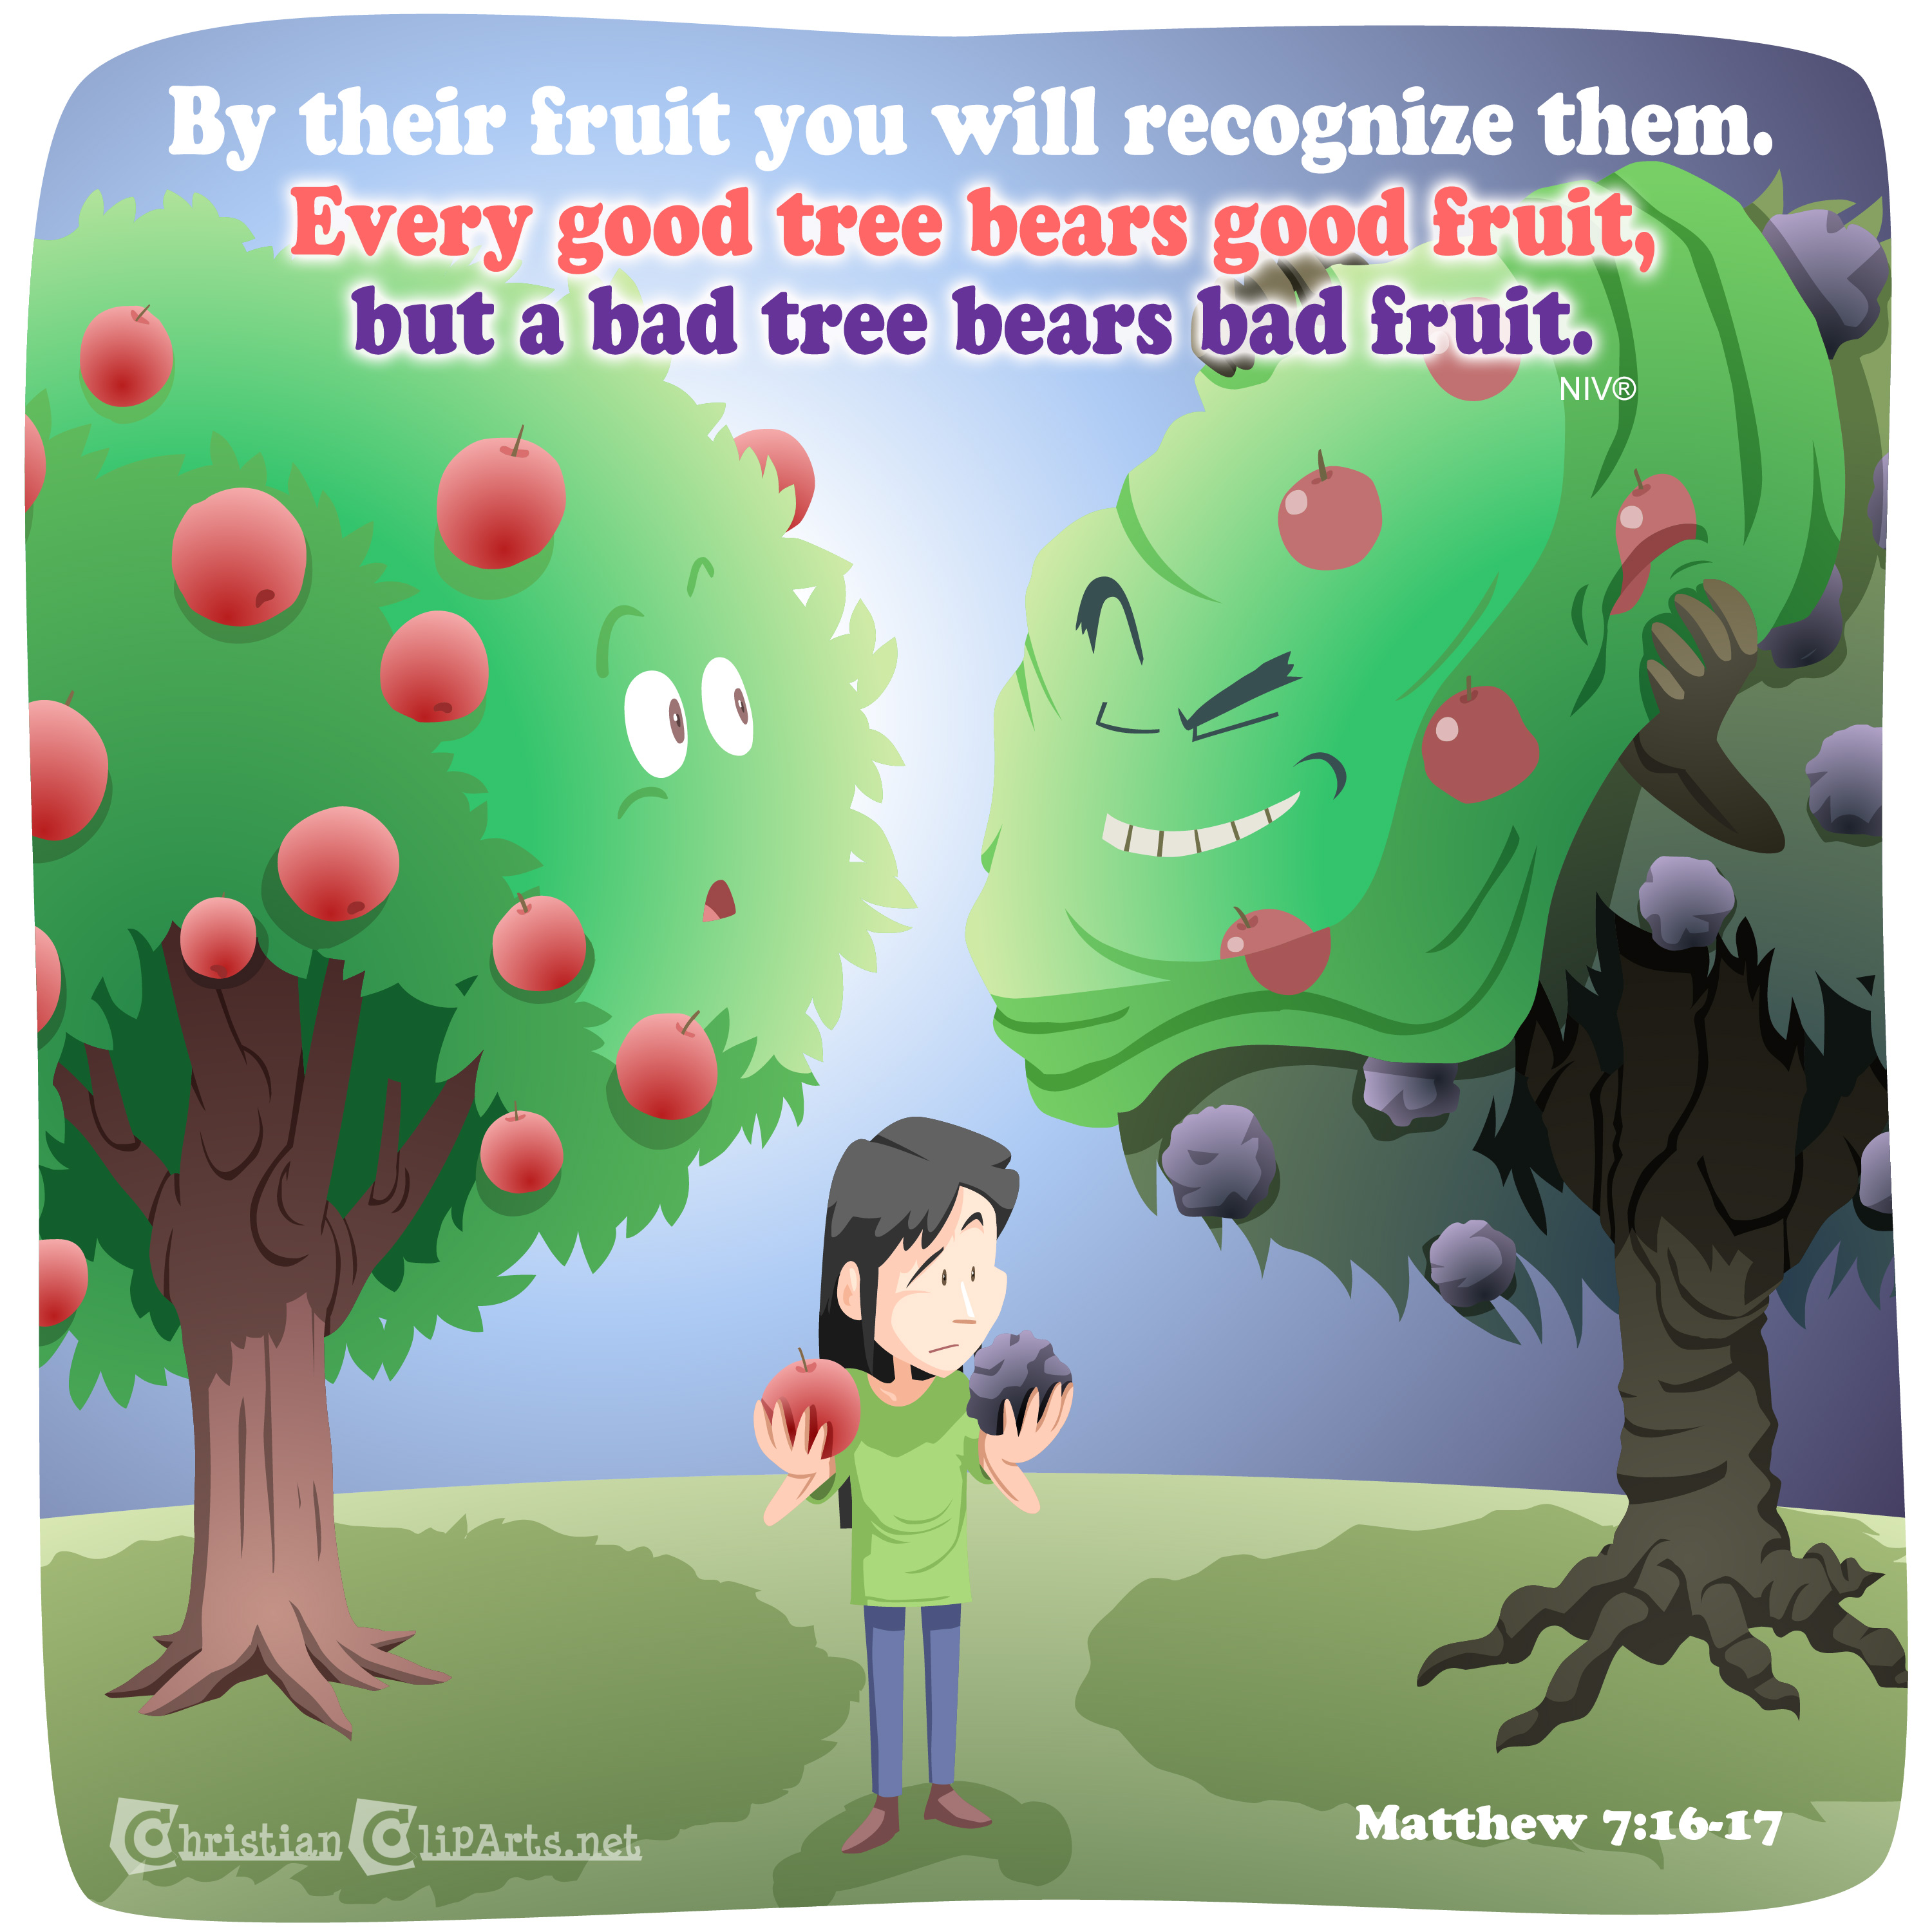 Good tree bears good fruit